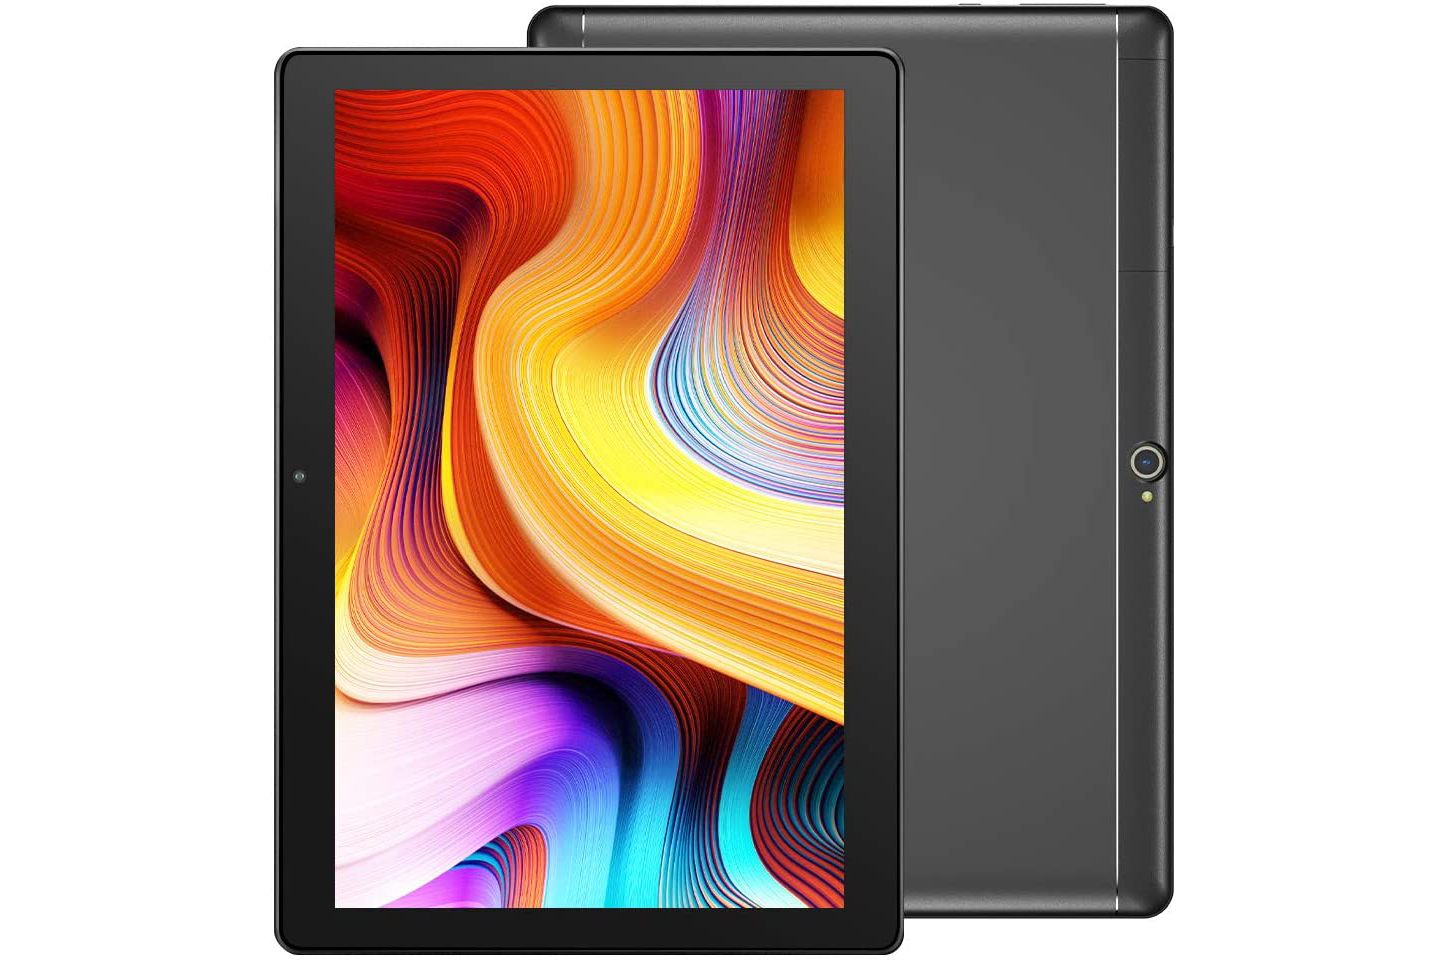 Copia de la tableta Dragon Touch Notepad K10